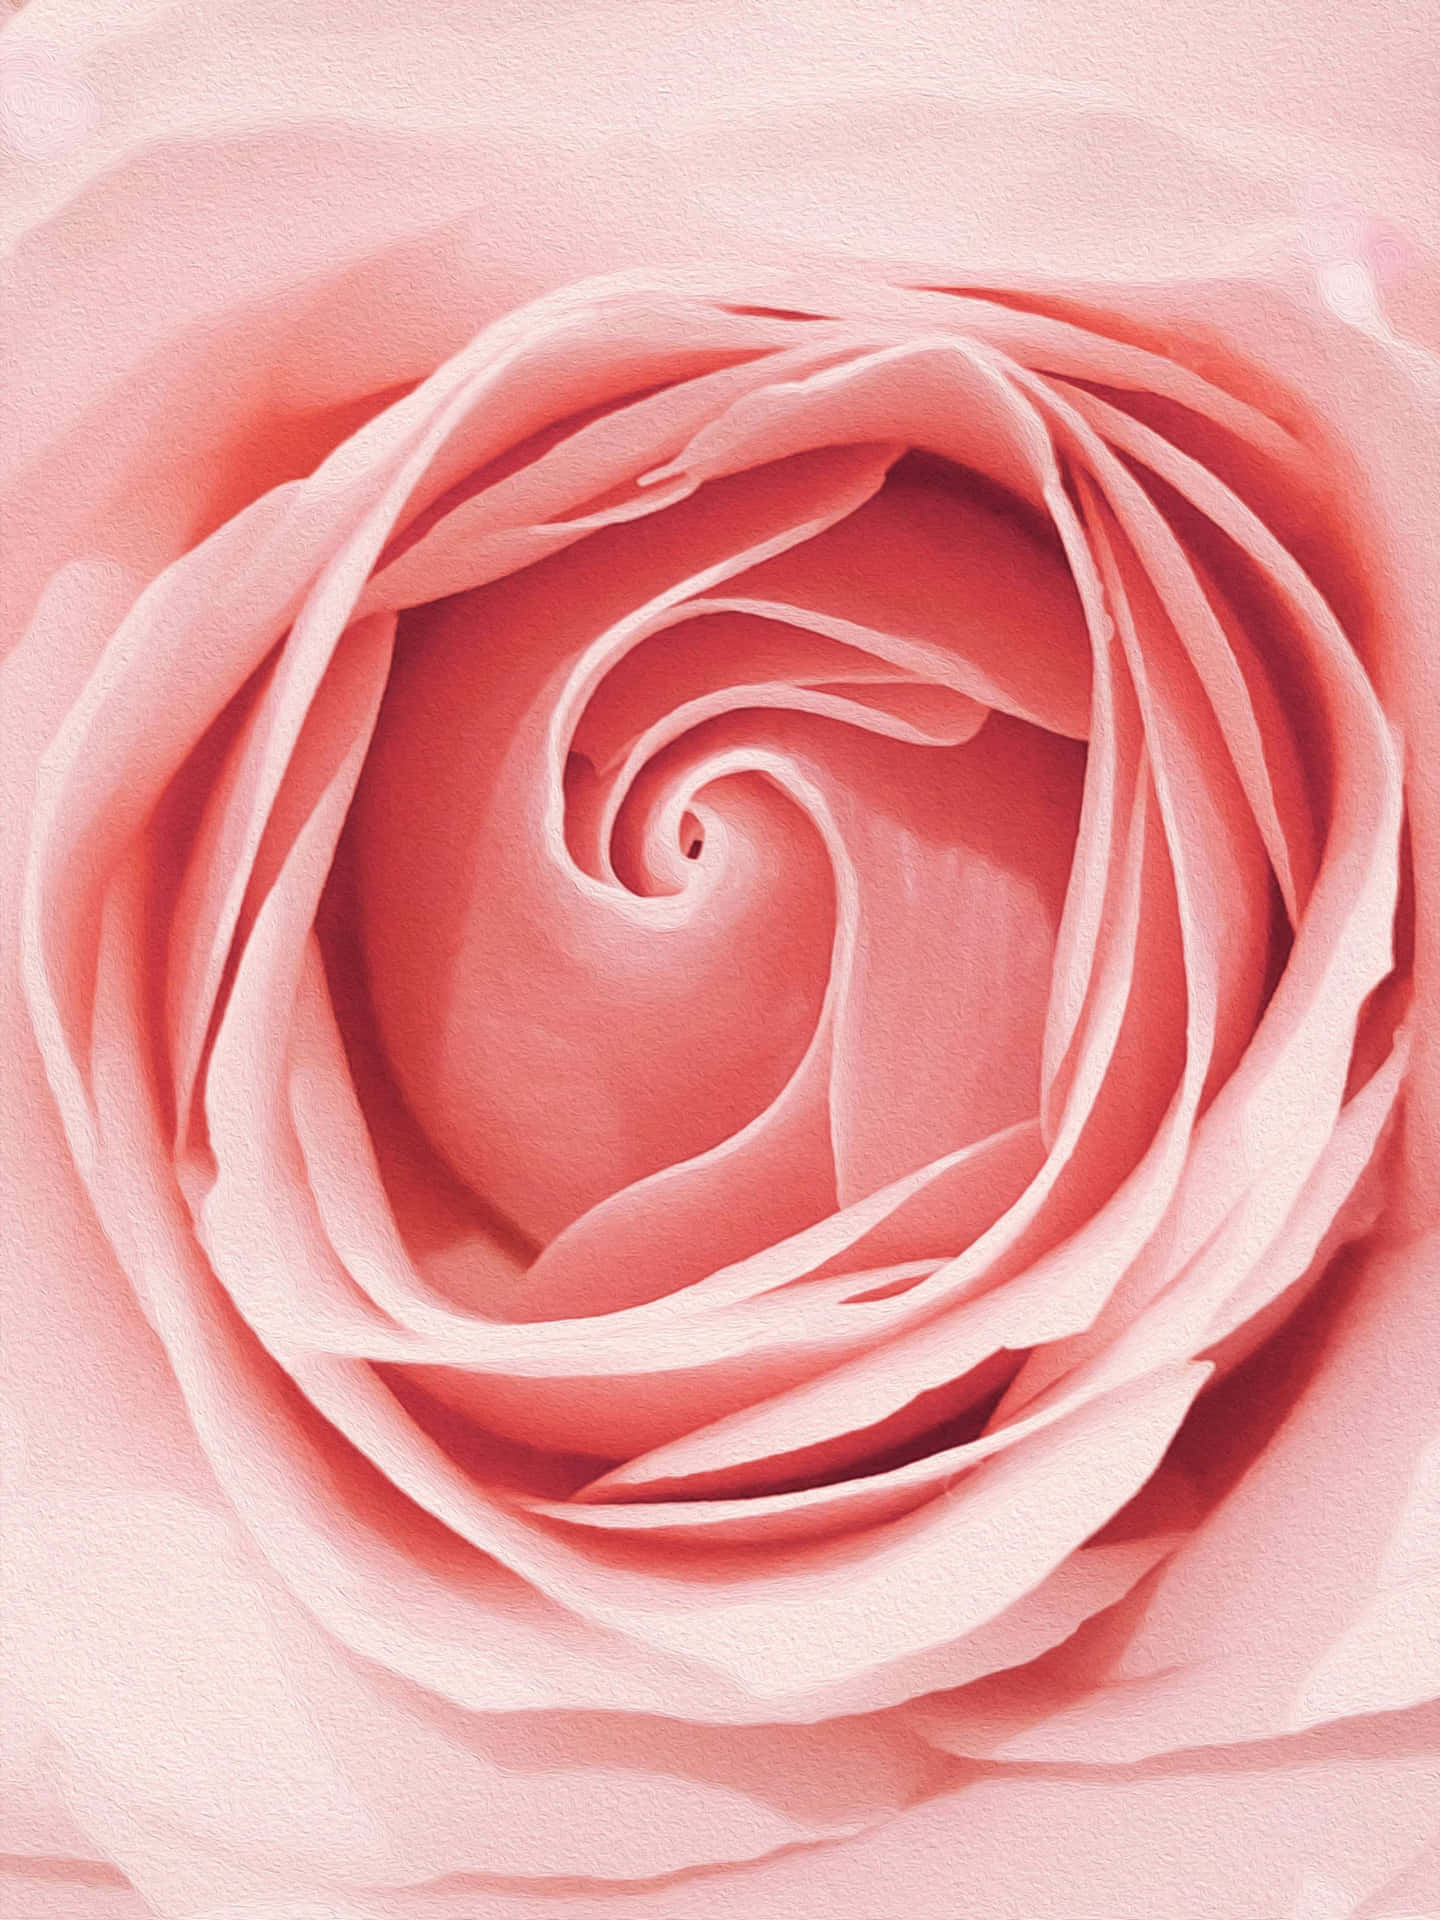 Pale Pink Rose Closeup Wallpaper